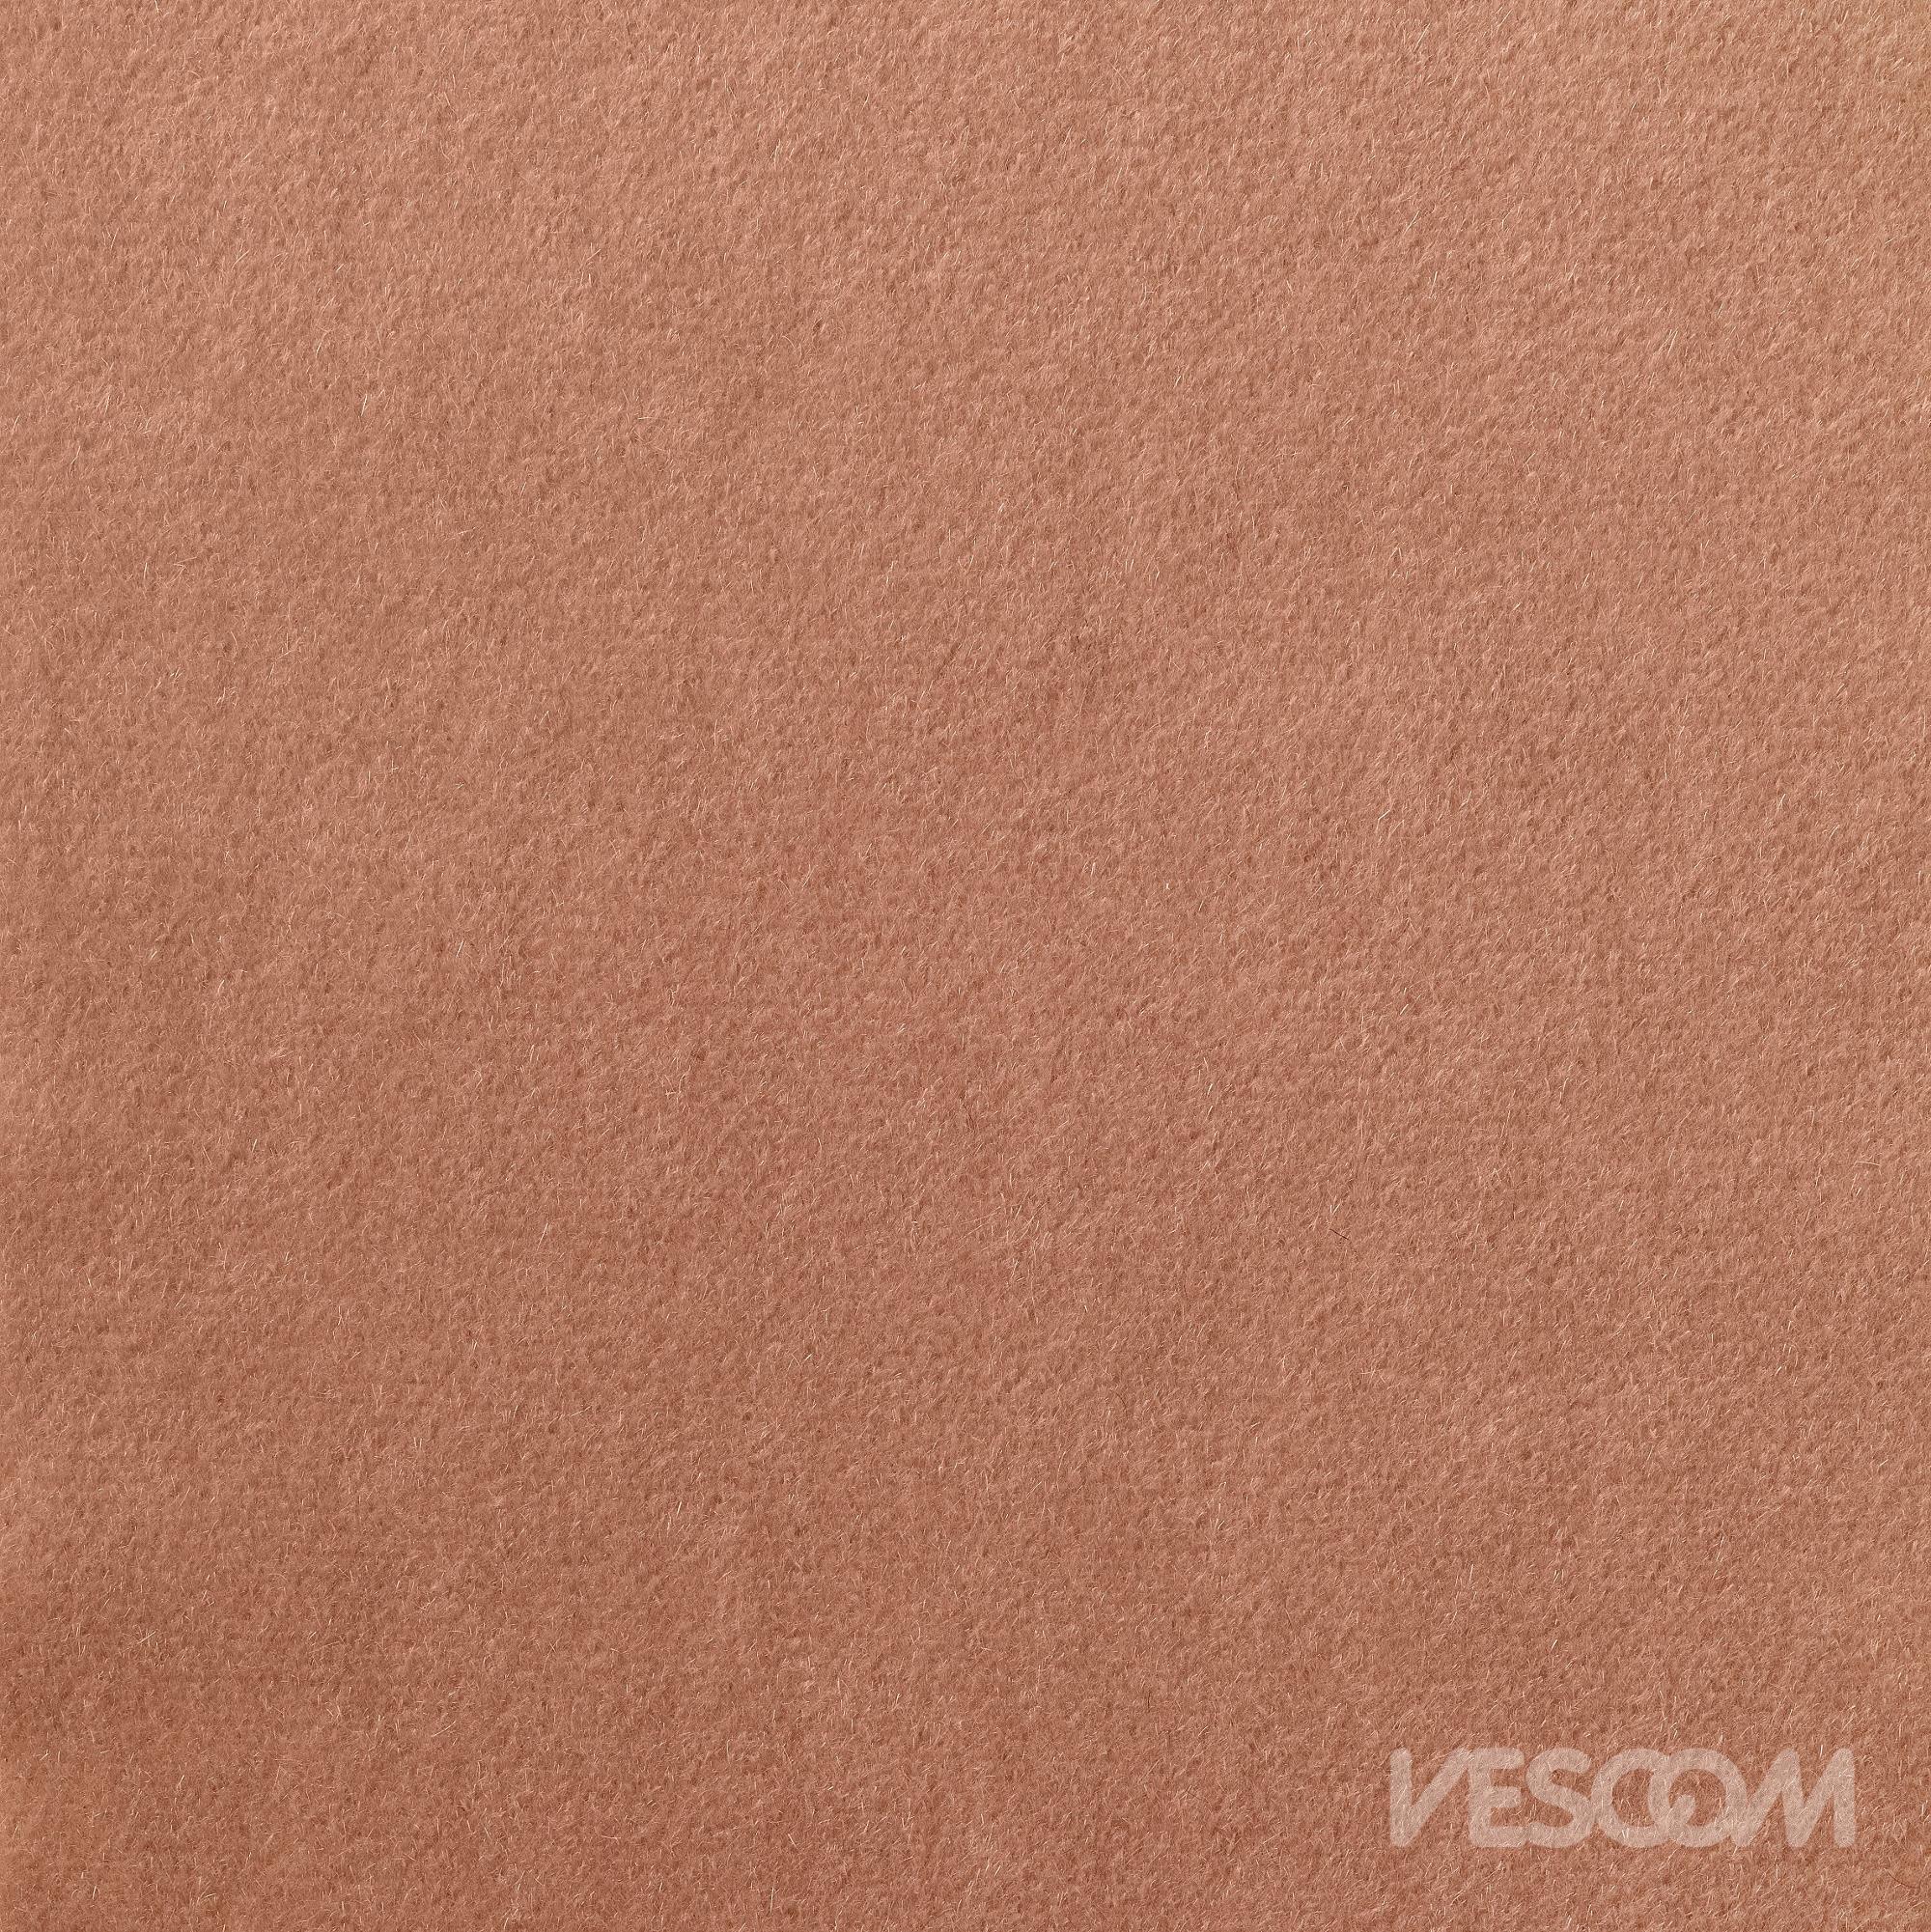 Vescom Ariana Upholstery Fabric 7061.31